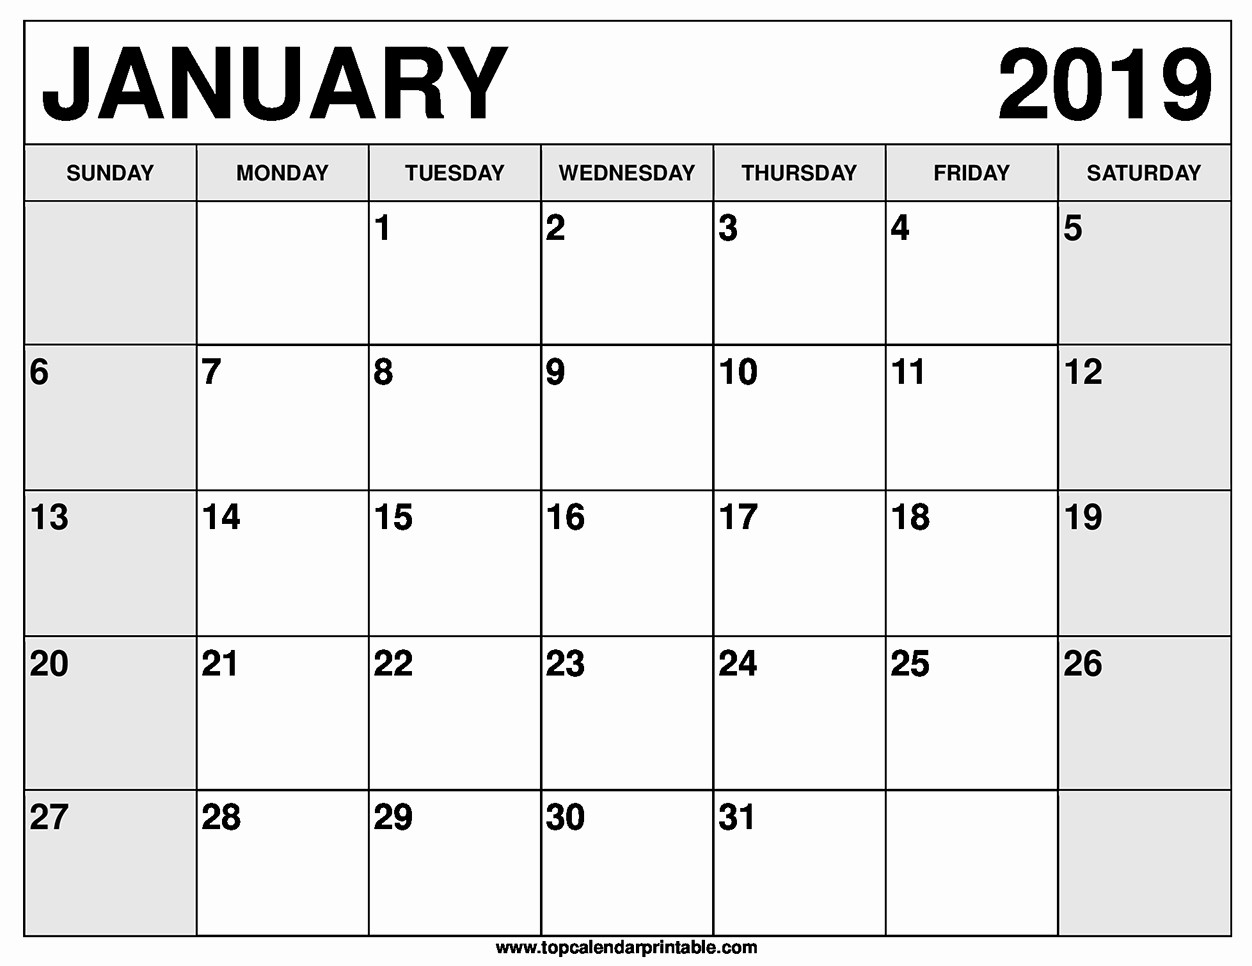 Blank January 2019 Calendar Template Luxury Blank January 2019 Calendar Printable